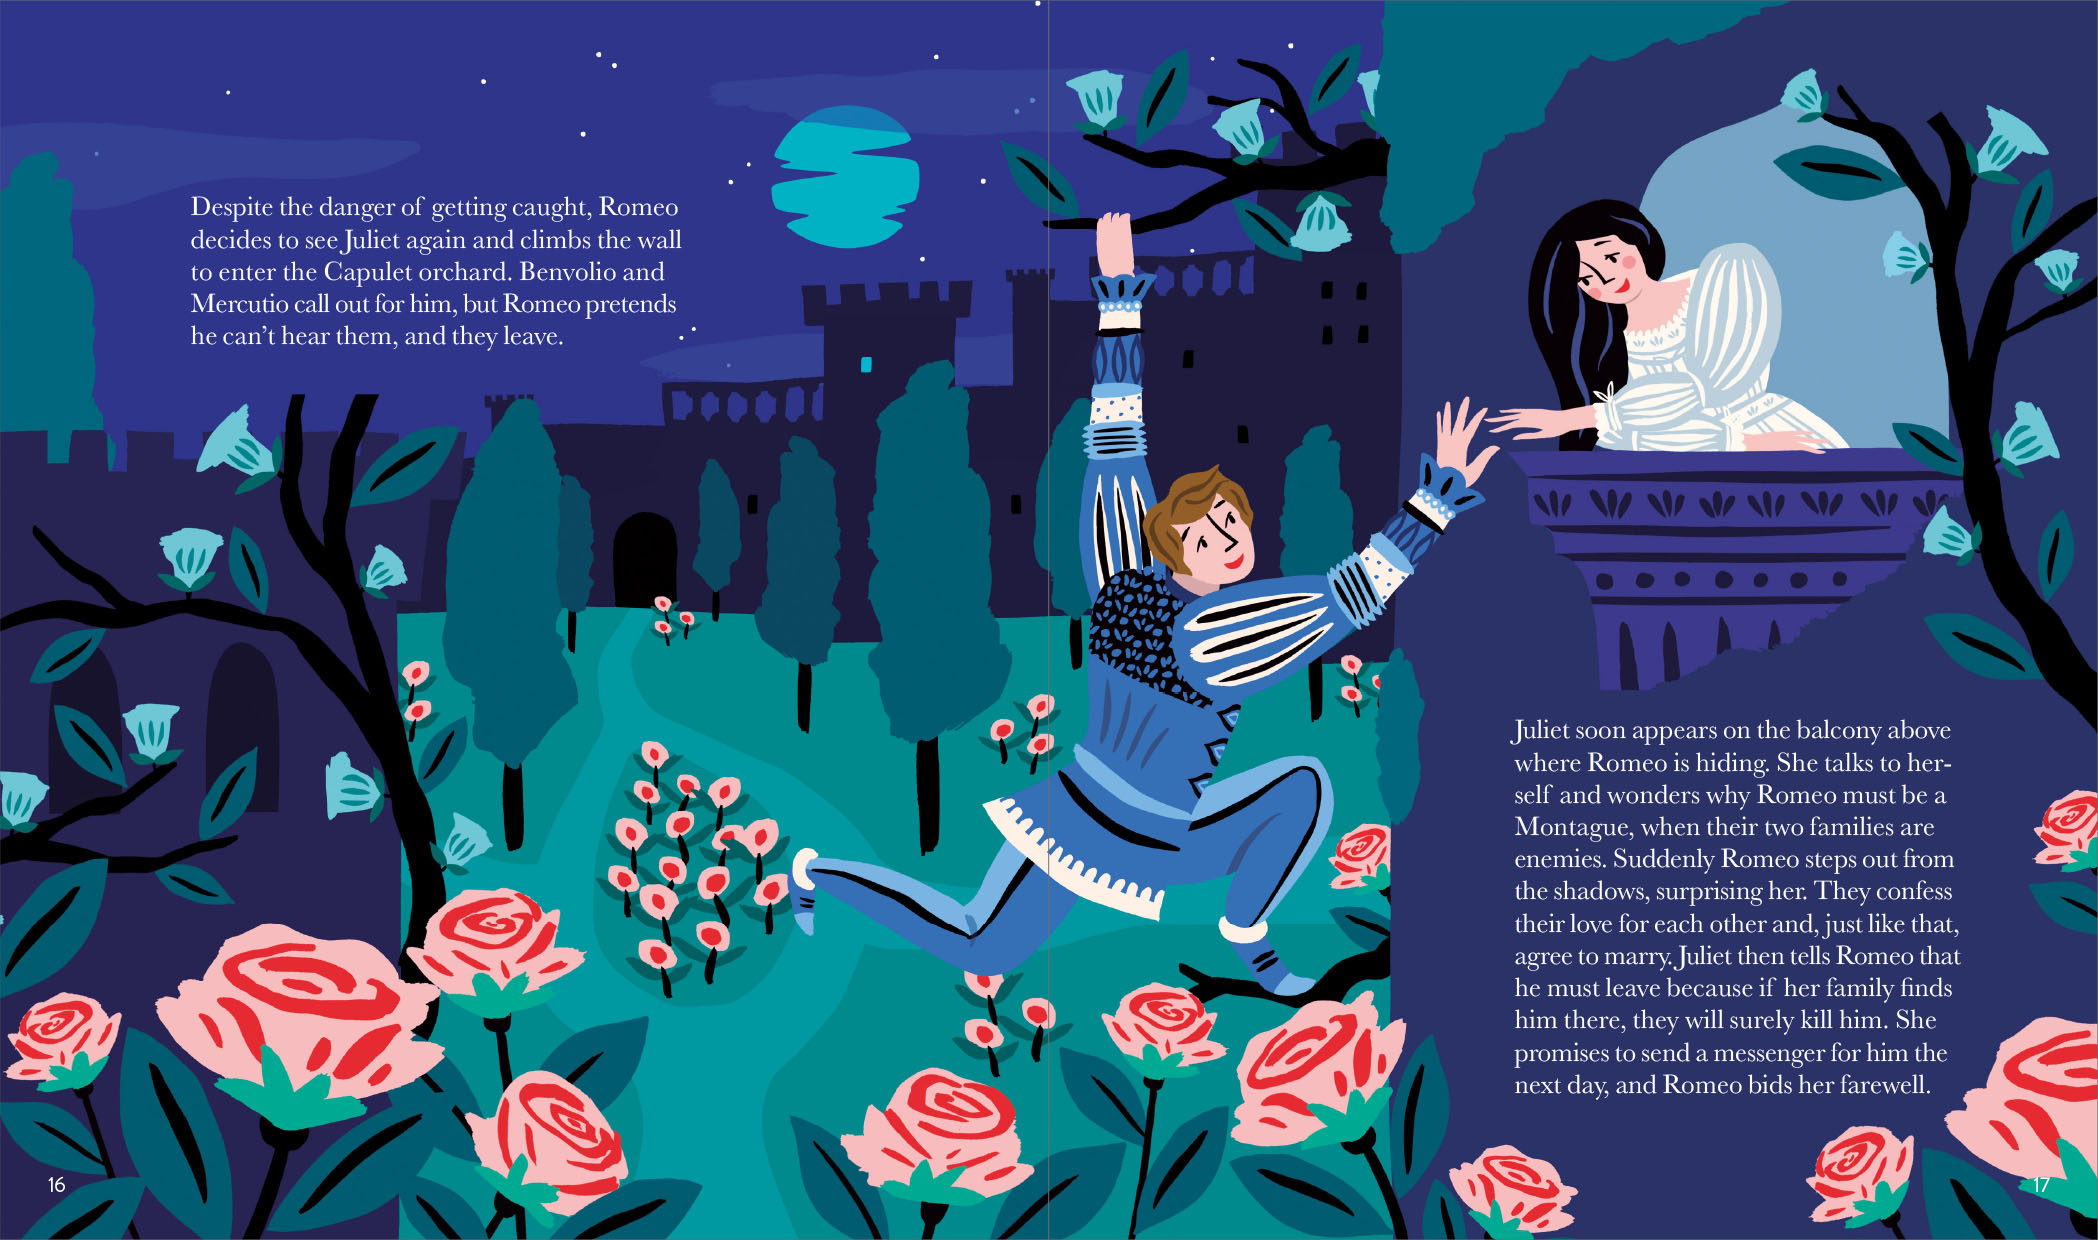 Romeo and Juliet illustration